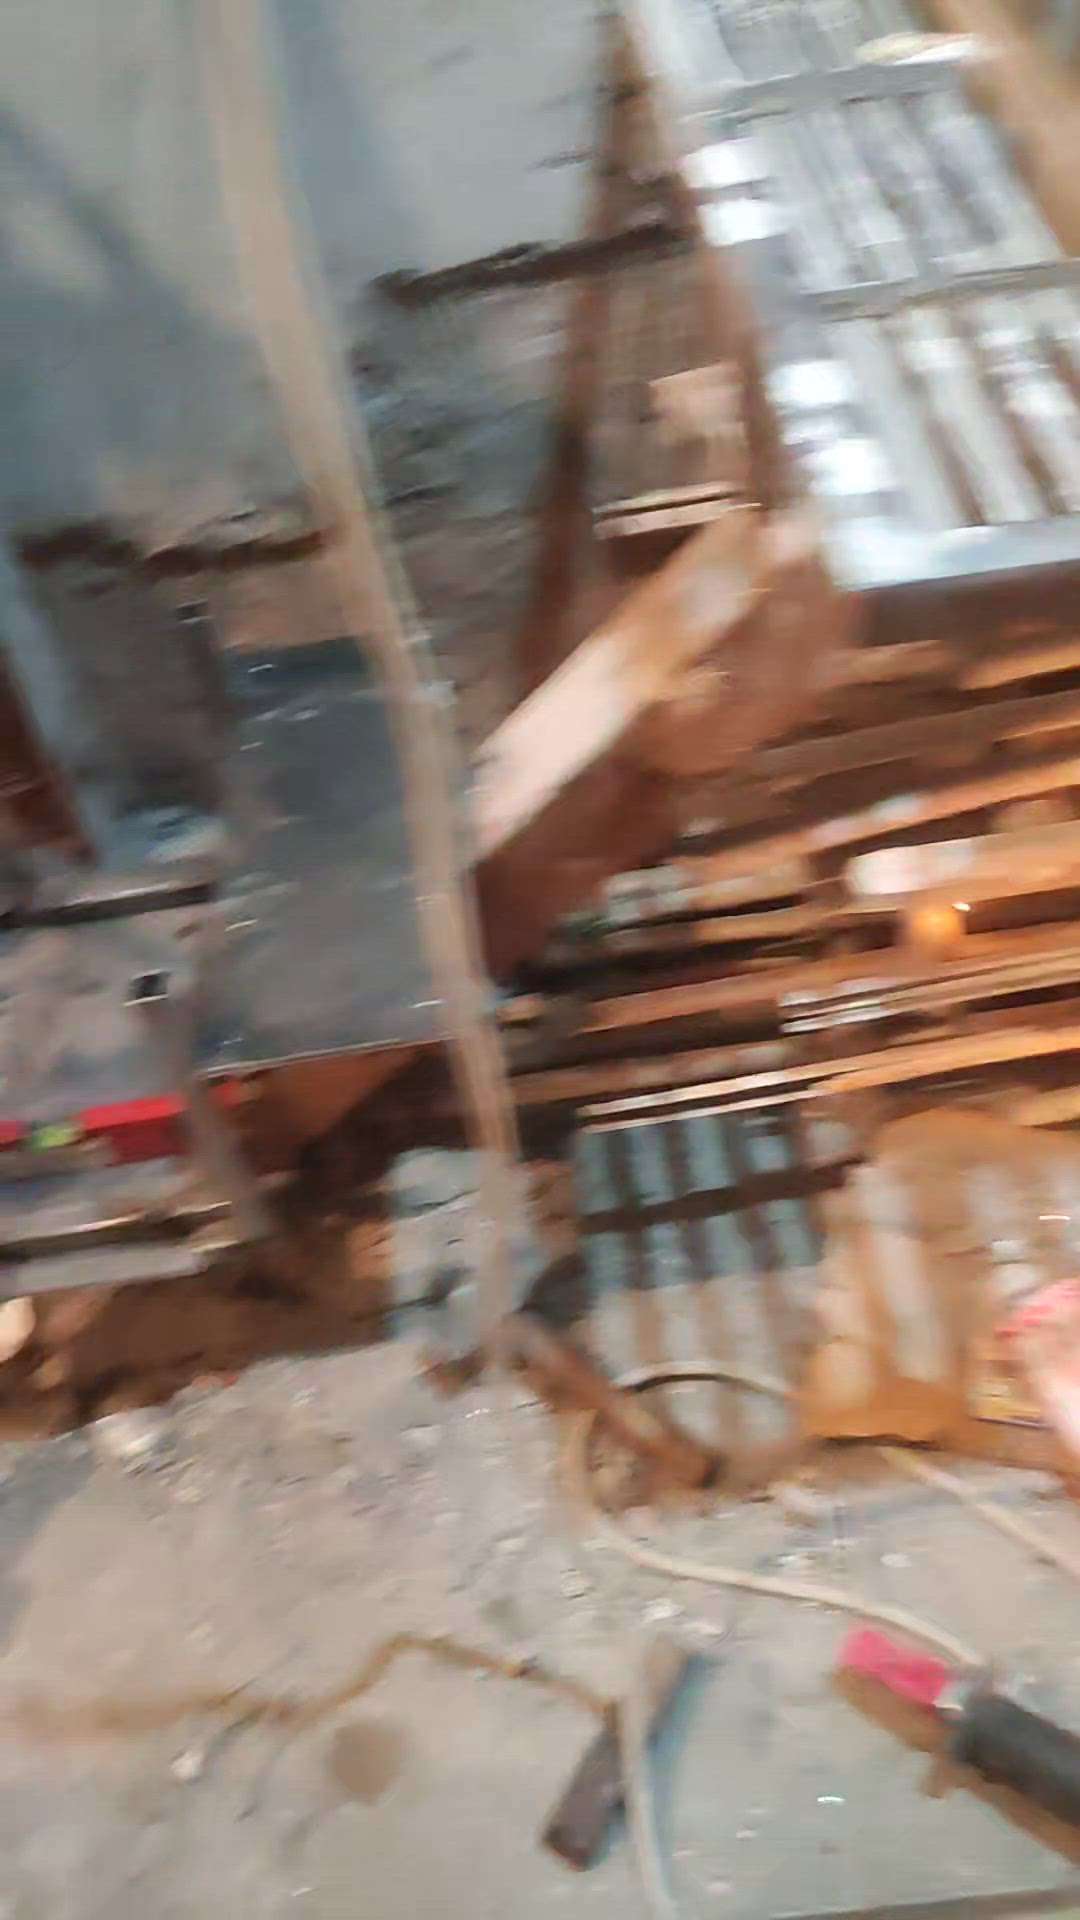 iron work from sadar bazar 12tooti..
👉📞 watsapp number 8285562500
. Bismillah fabrication welding work
.
.
.
.
.
.
.
.
.
.
 #koloviral  #kolopost  #trendingdesign  #trendydesigns  #ironstairsdesign  #ironpipegate  #ironhandrails❤  #irondoors  #ironworkerlife